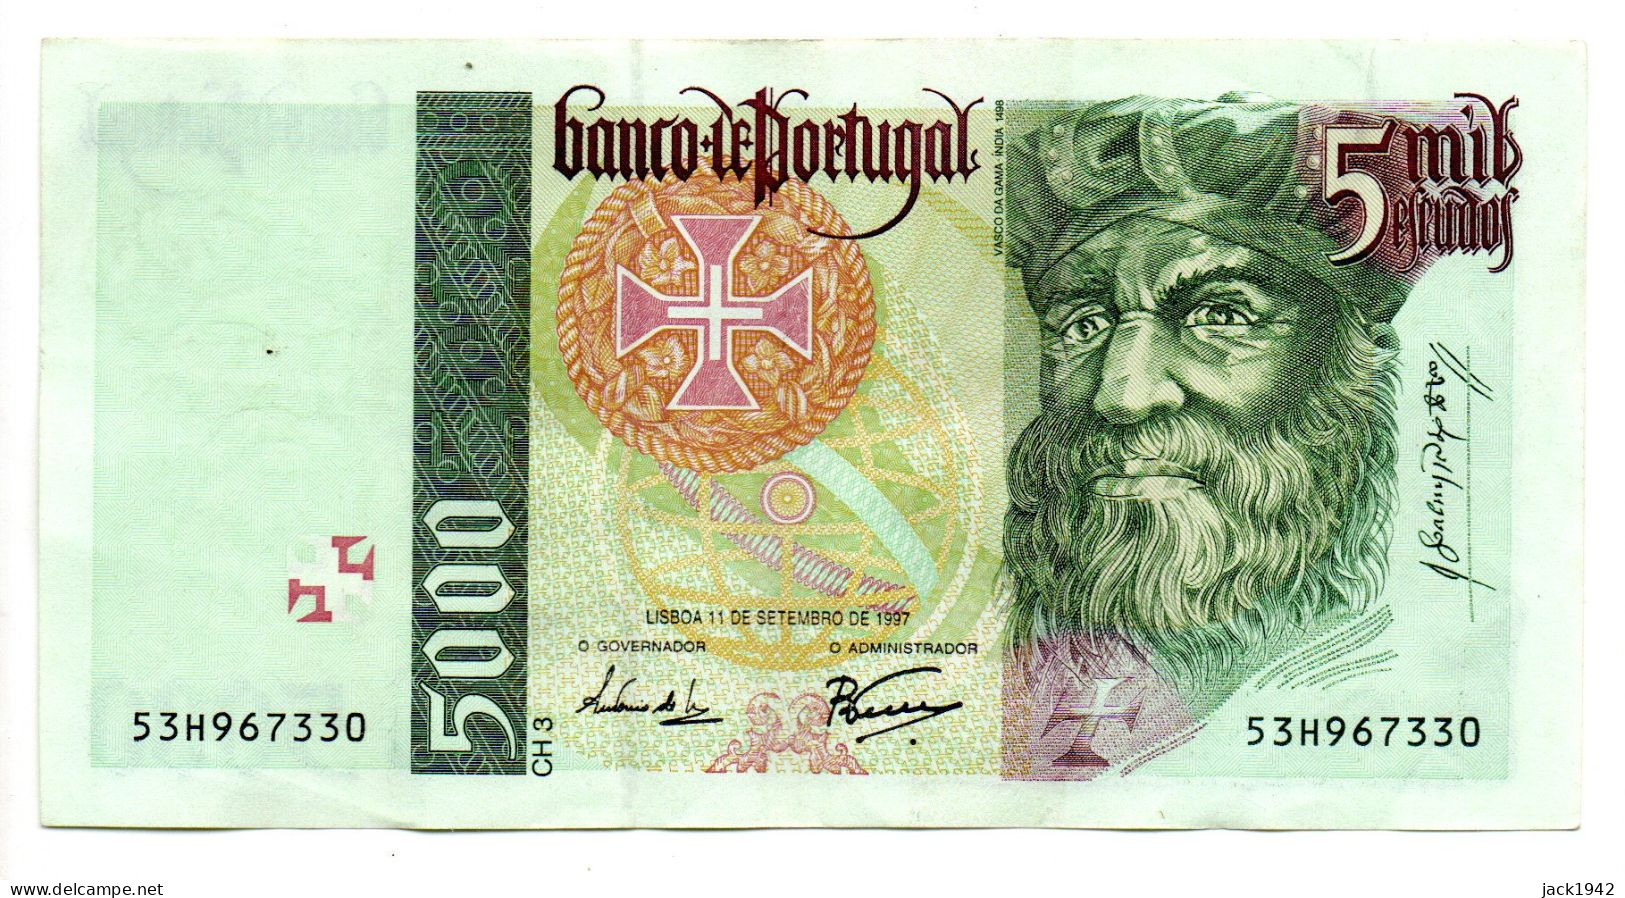 5000 Escudos Note - Billet De 5000 Escudos - Septembre 1997 - TTB Very Fine Condition - Portogallo